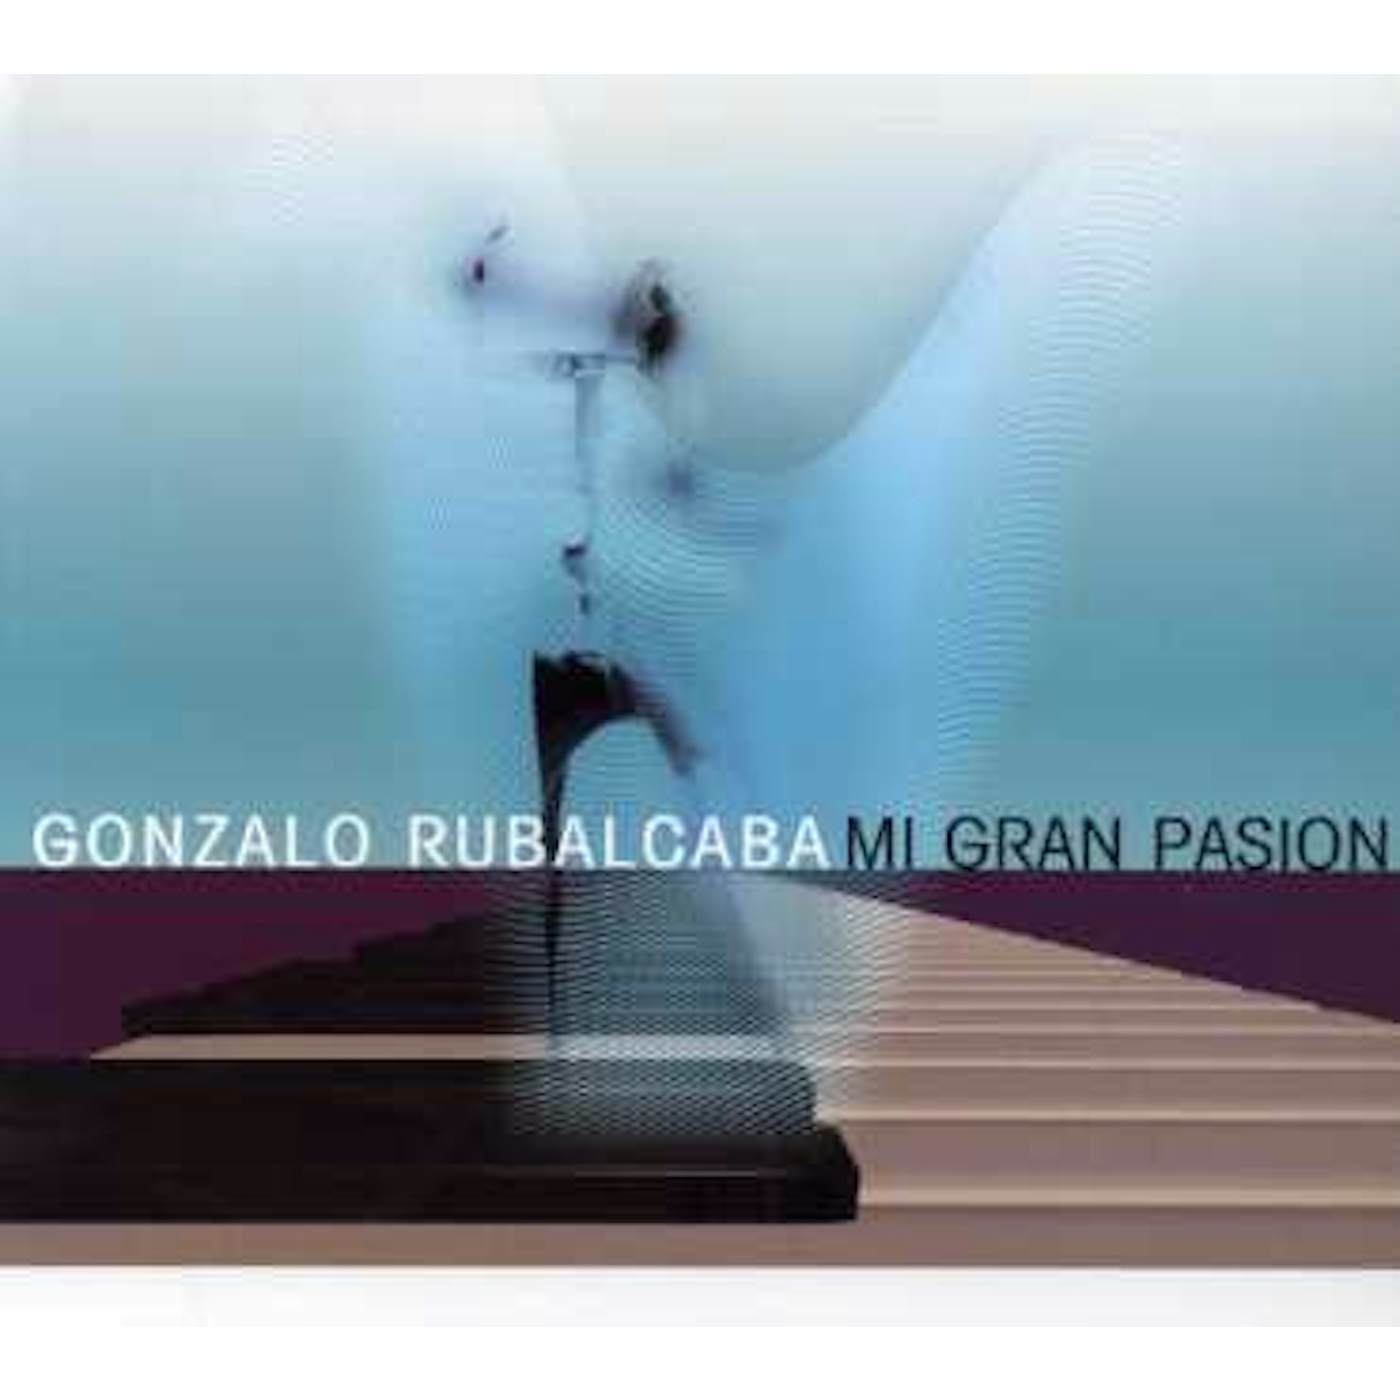 Gonzalo Rubalcaba MI GRAN PASION CD